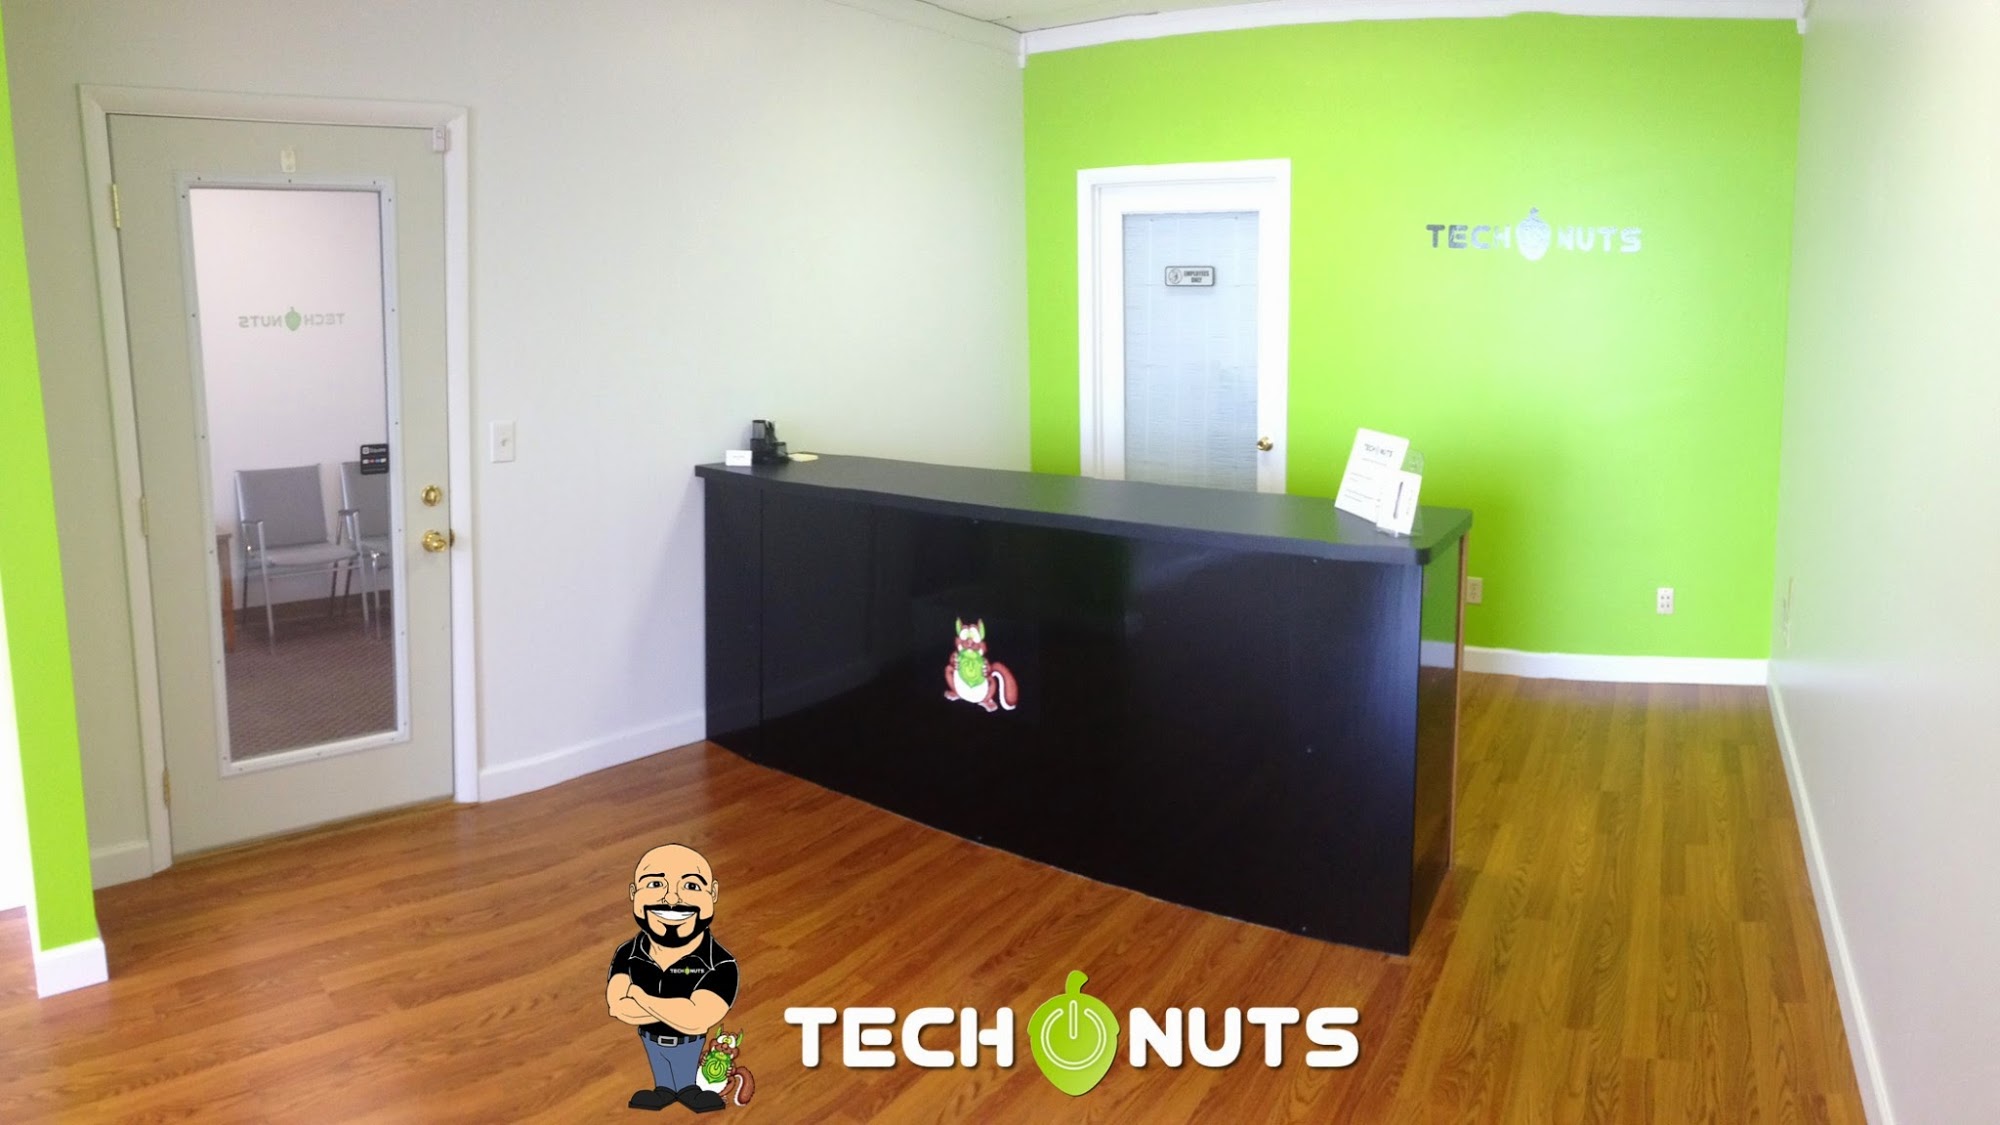 Tech Nuts, LLC